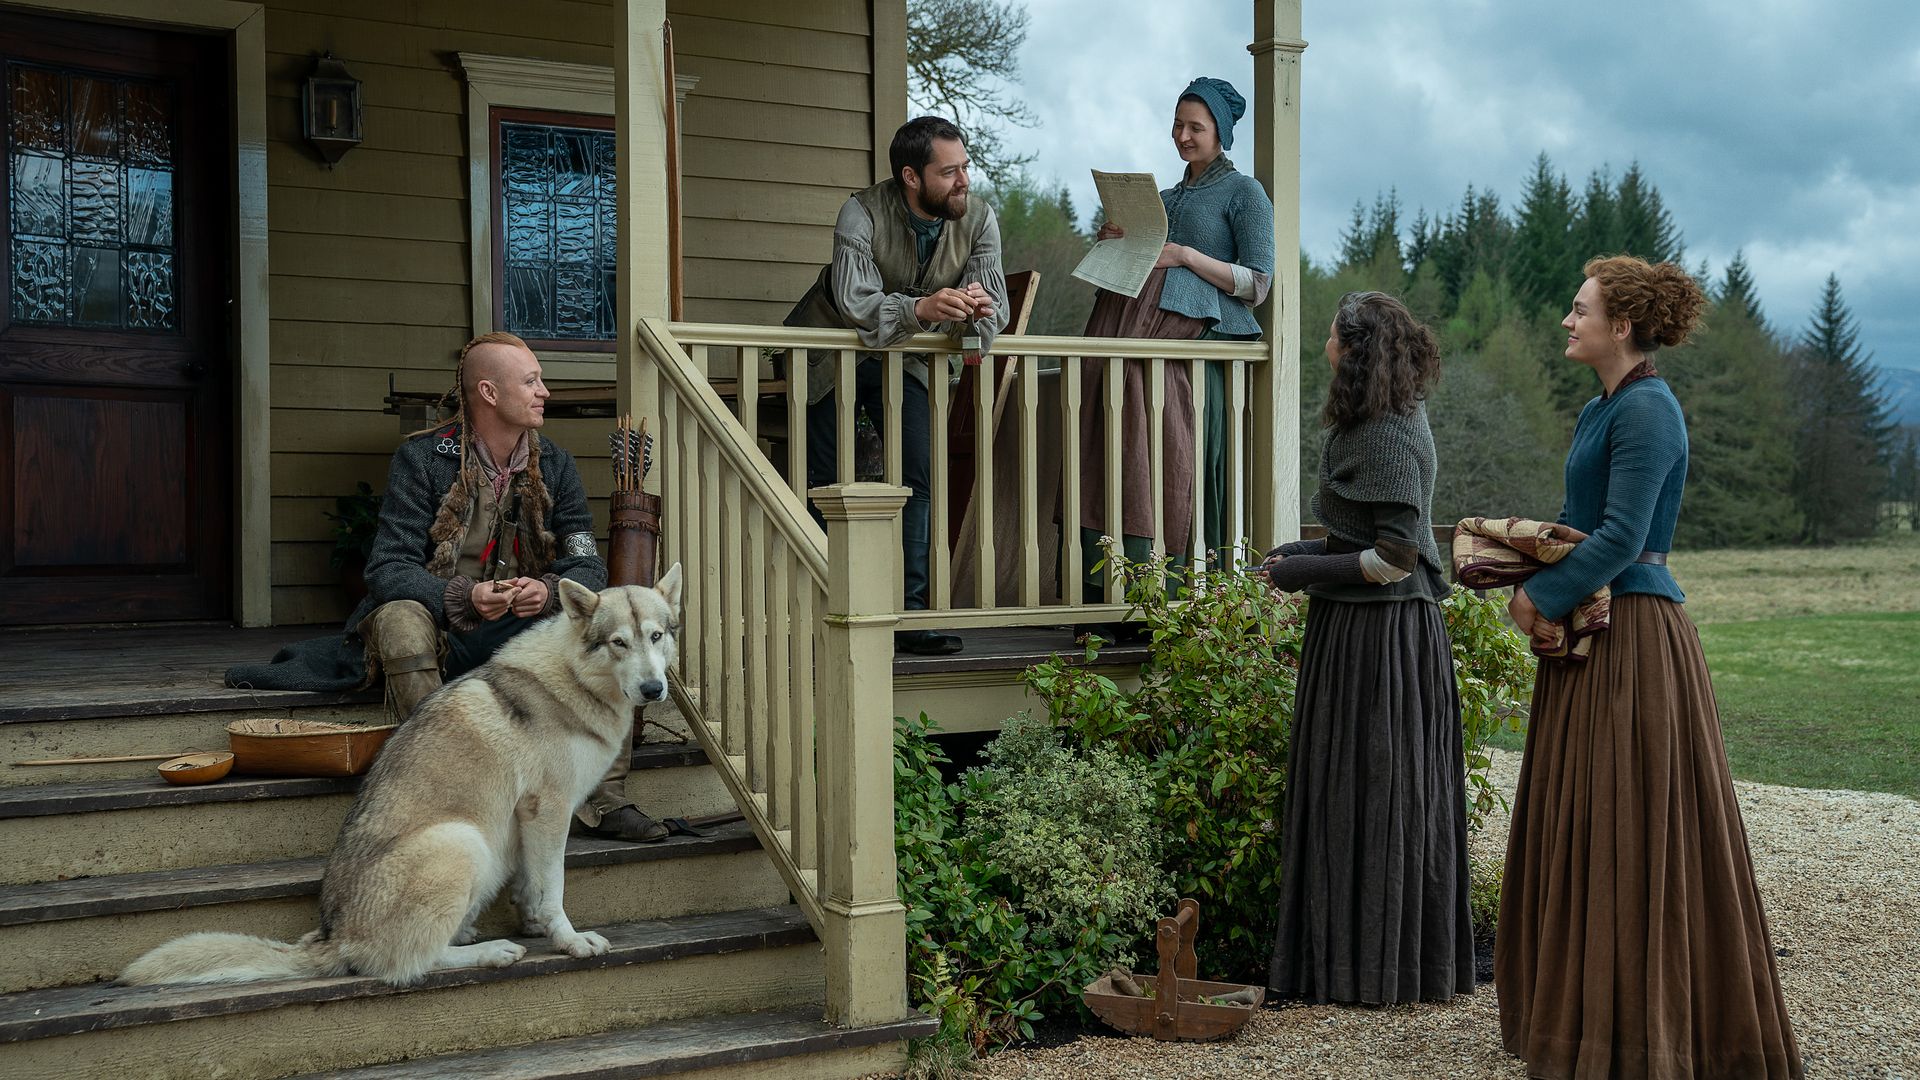 Outlander's seventh season premieres June 16 